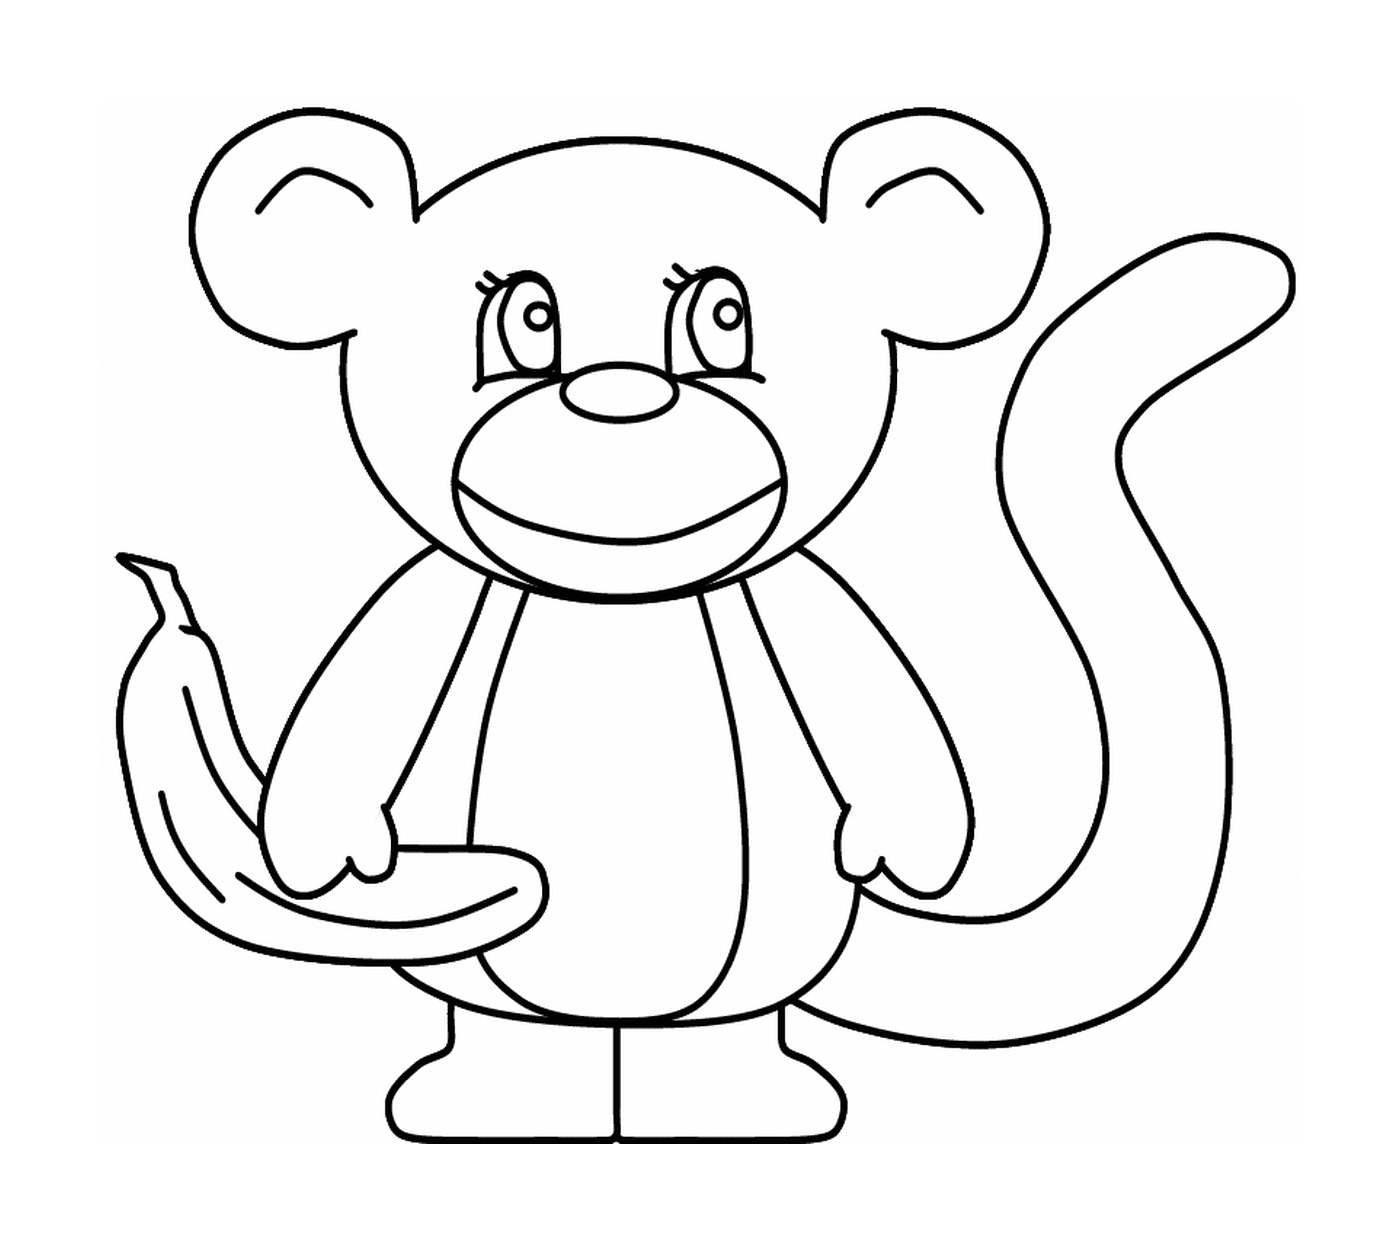  Monkey with a banana 